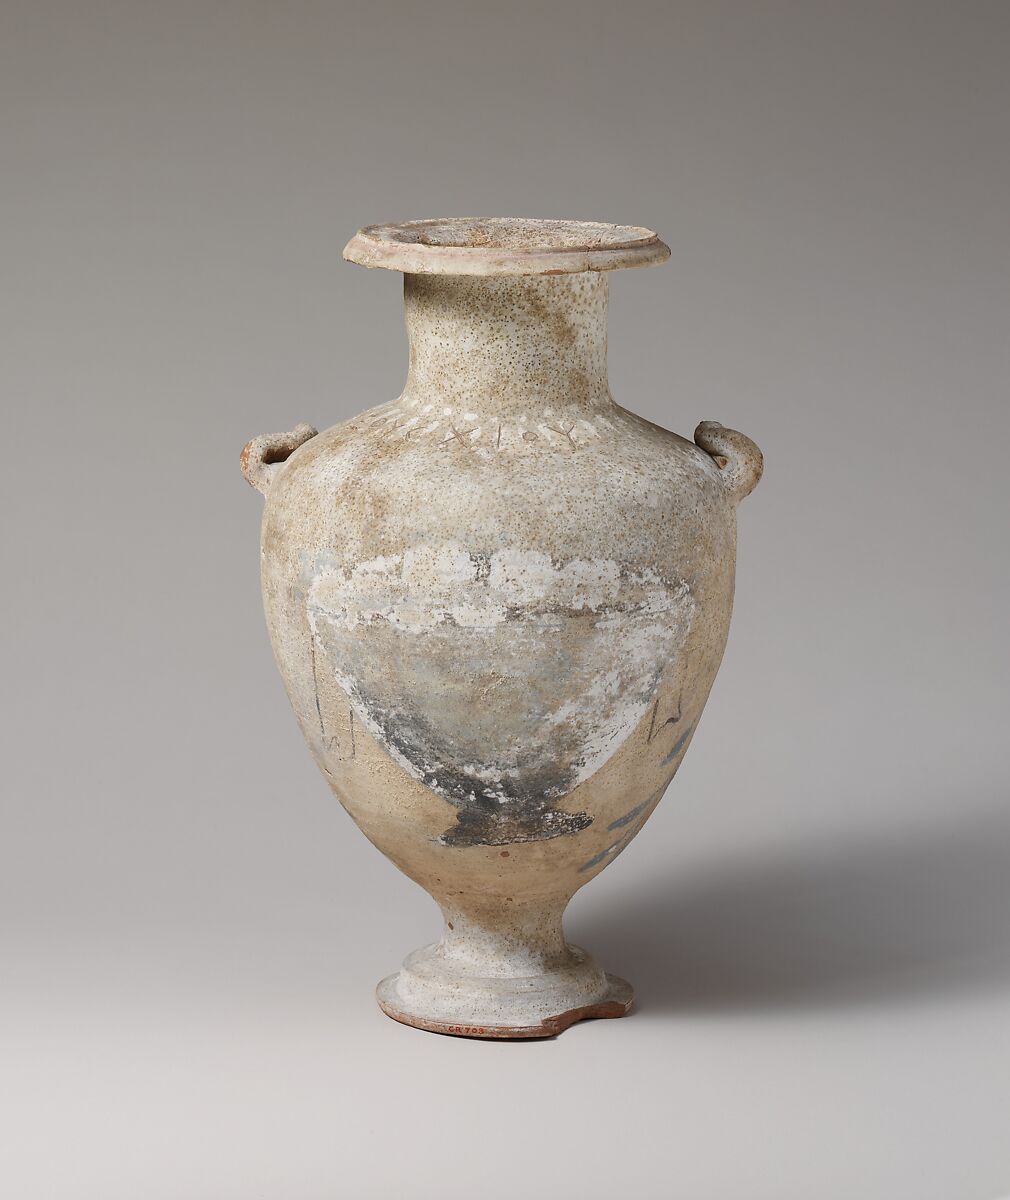 Terracotta Hadra hydria (water jar), Terracotta, Greek, Ptolemaic